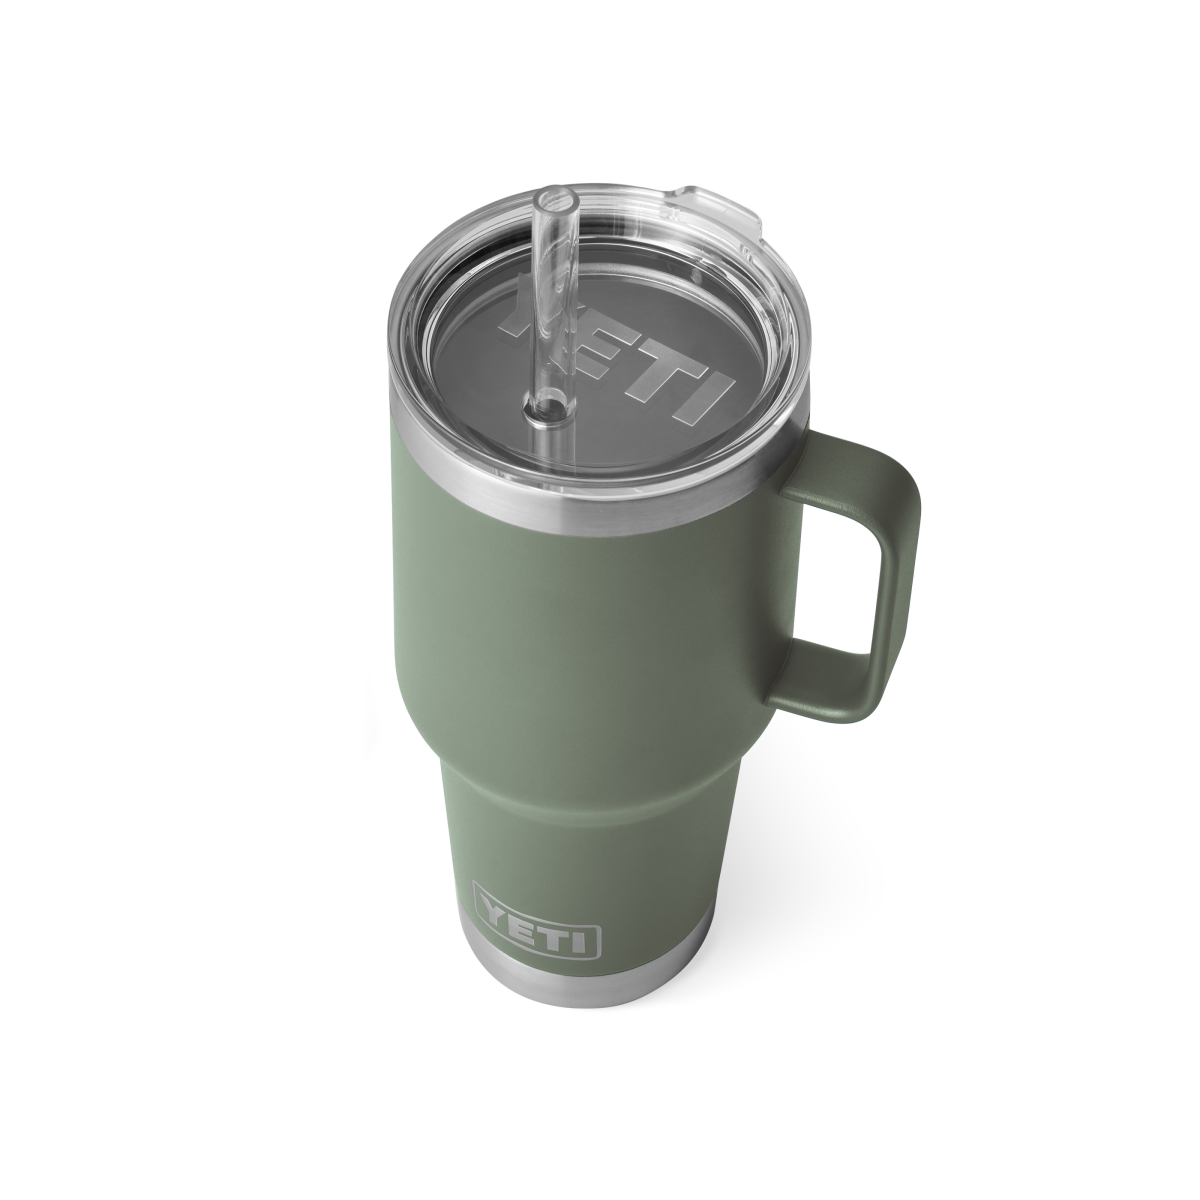 Yeti Rambler Mug with Straw Lid - 35 oz - Camp Green - Grange Co-op